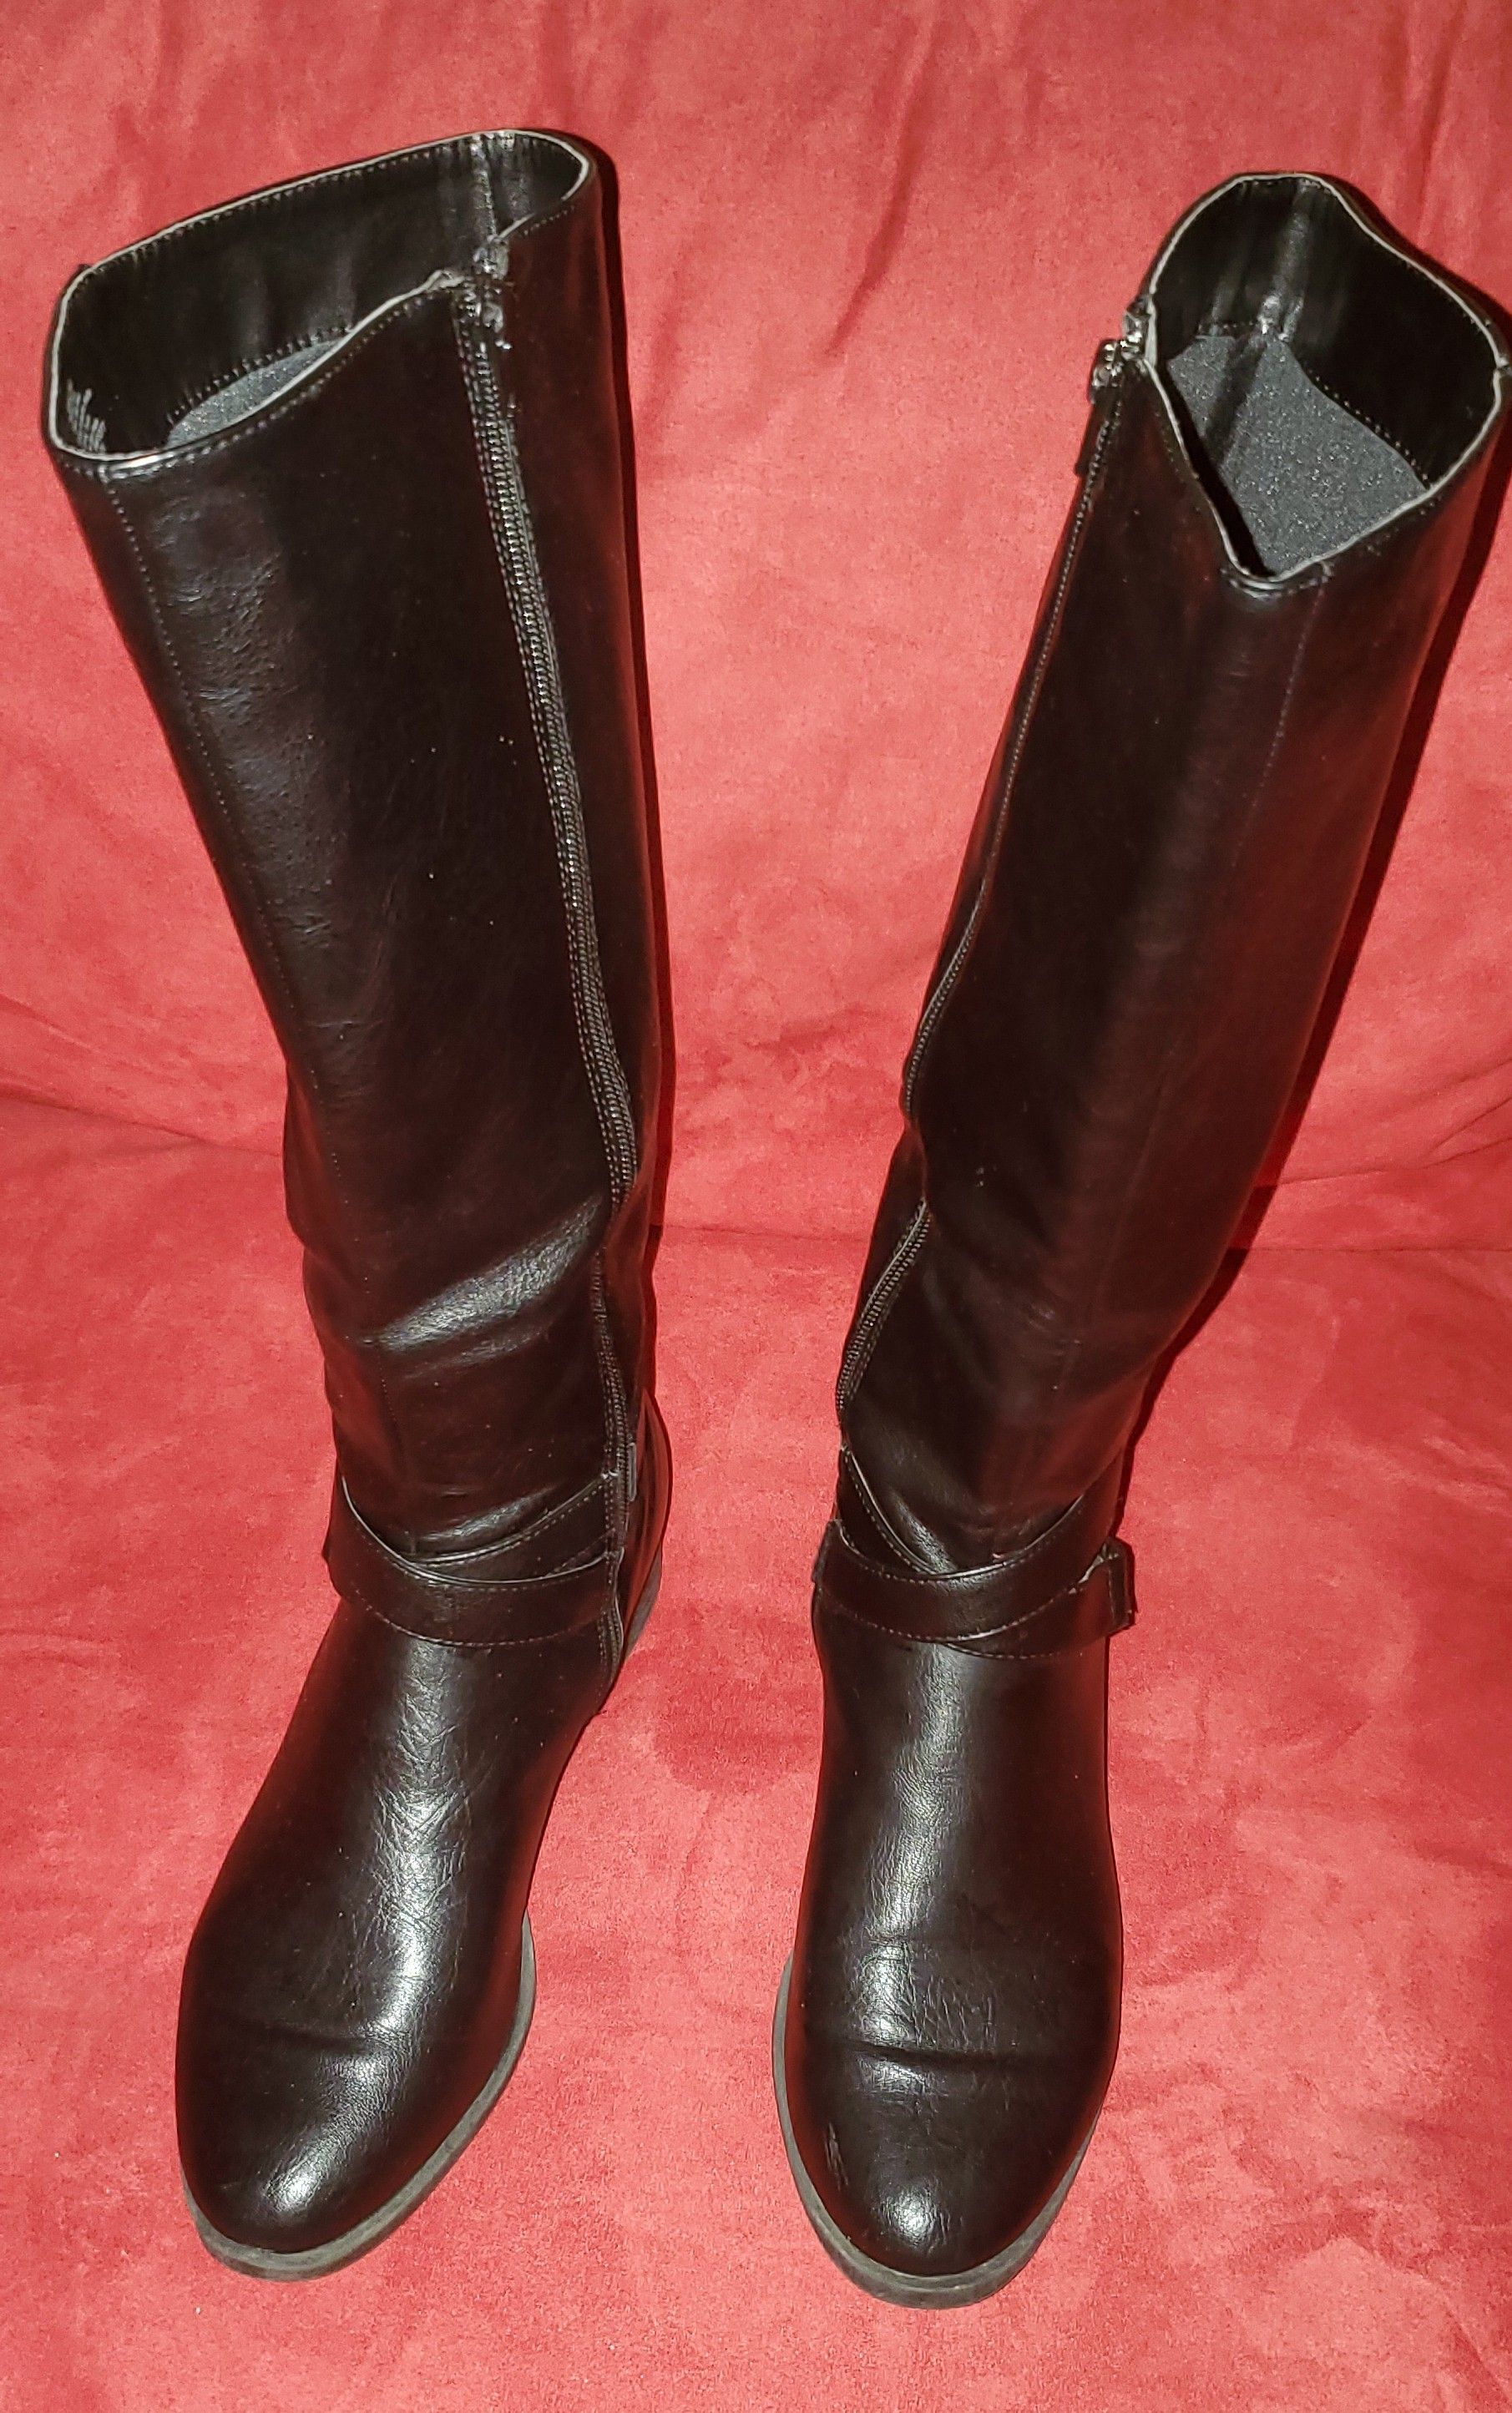 Black Knee High Riding Boots.  Size 9 Medium.